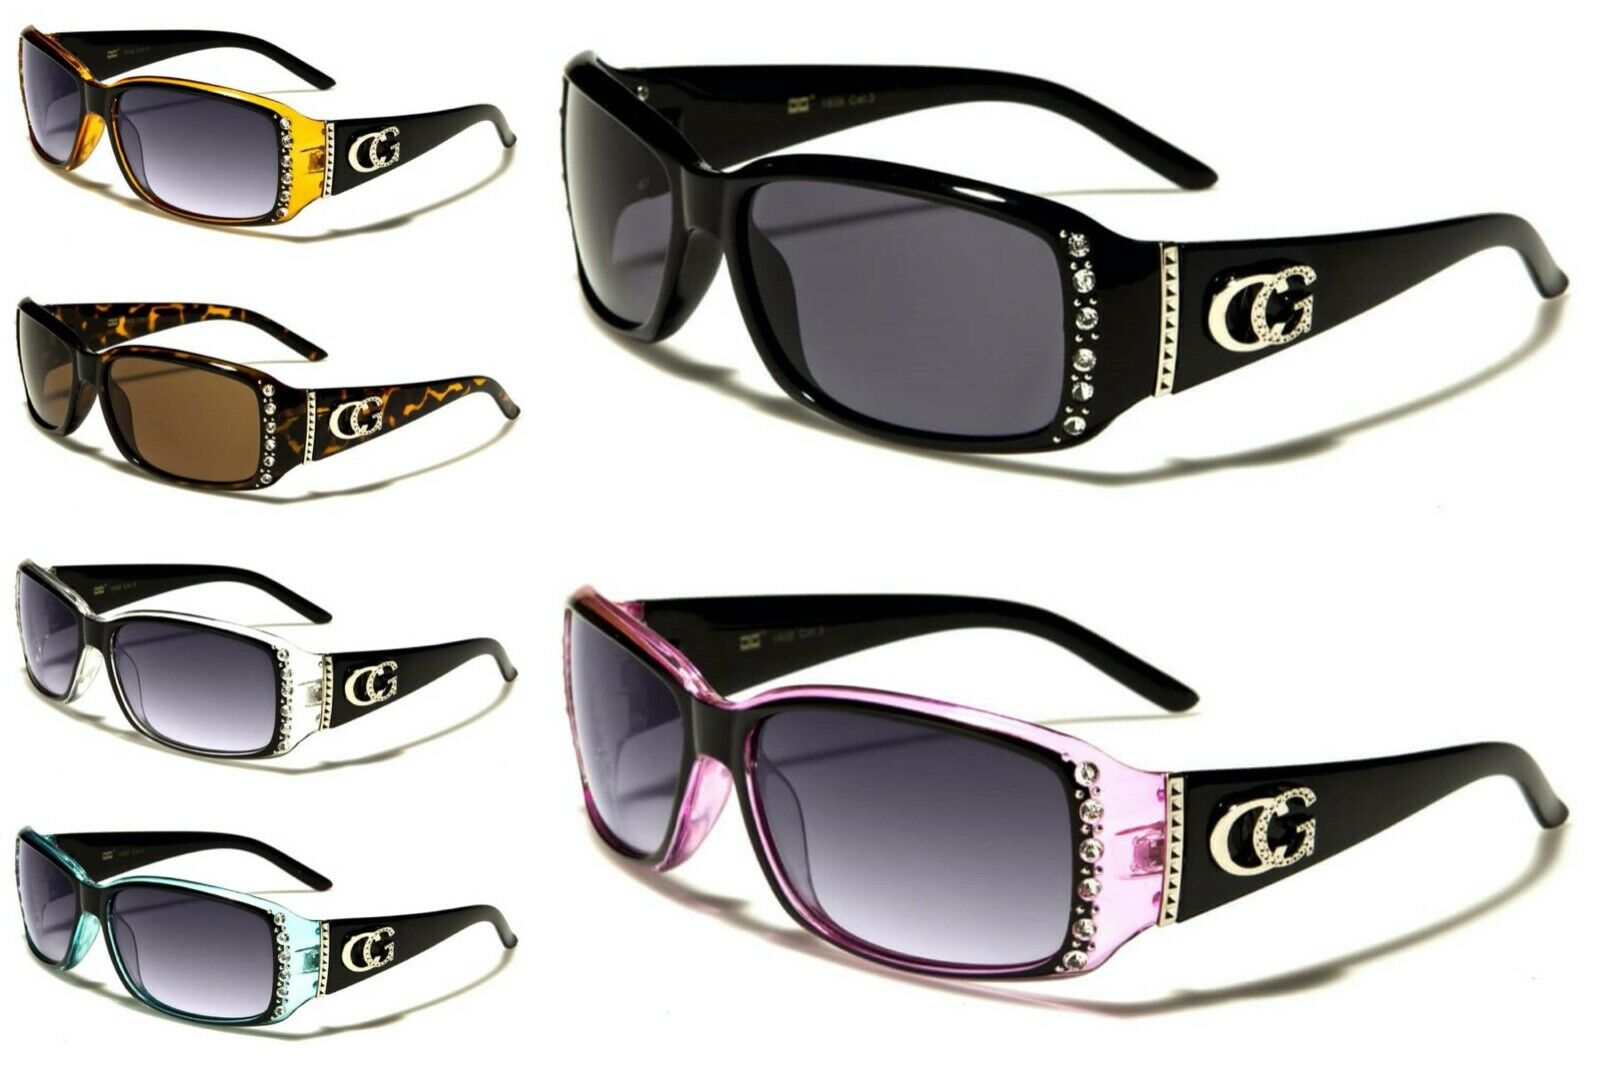 Cg Eyewear Sunglasses Designer Fashion With Rhinestones Plastic Frames For Women